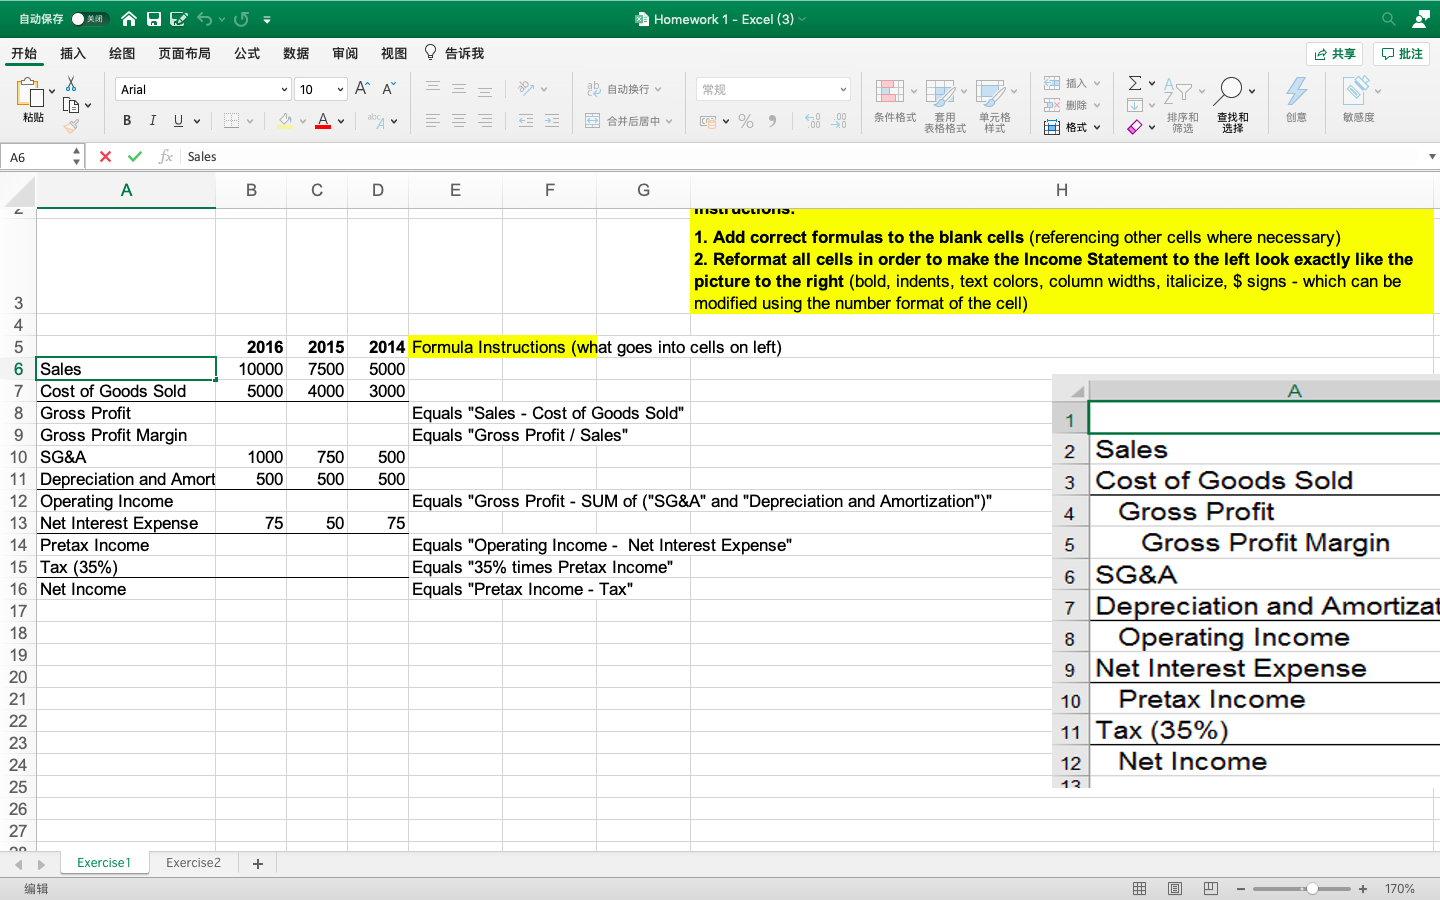 自动保存 关闭nhe Su Homework 1 Excel 3 开始x 页面布局at 审阅 Chegg Com